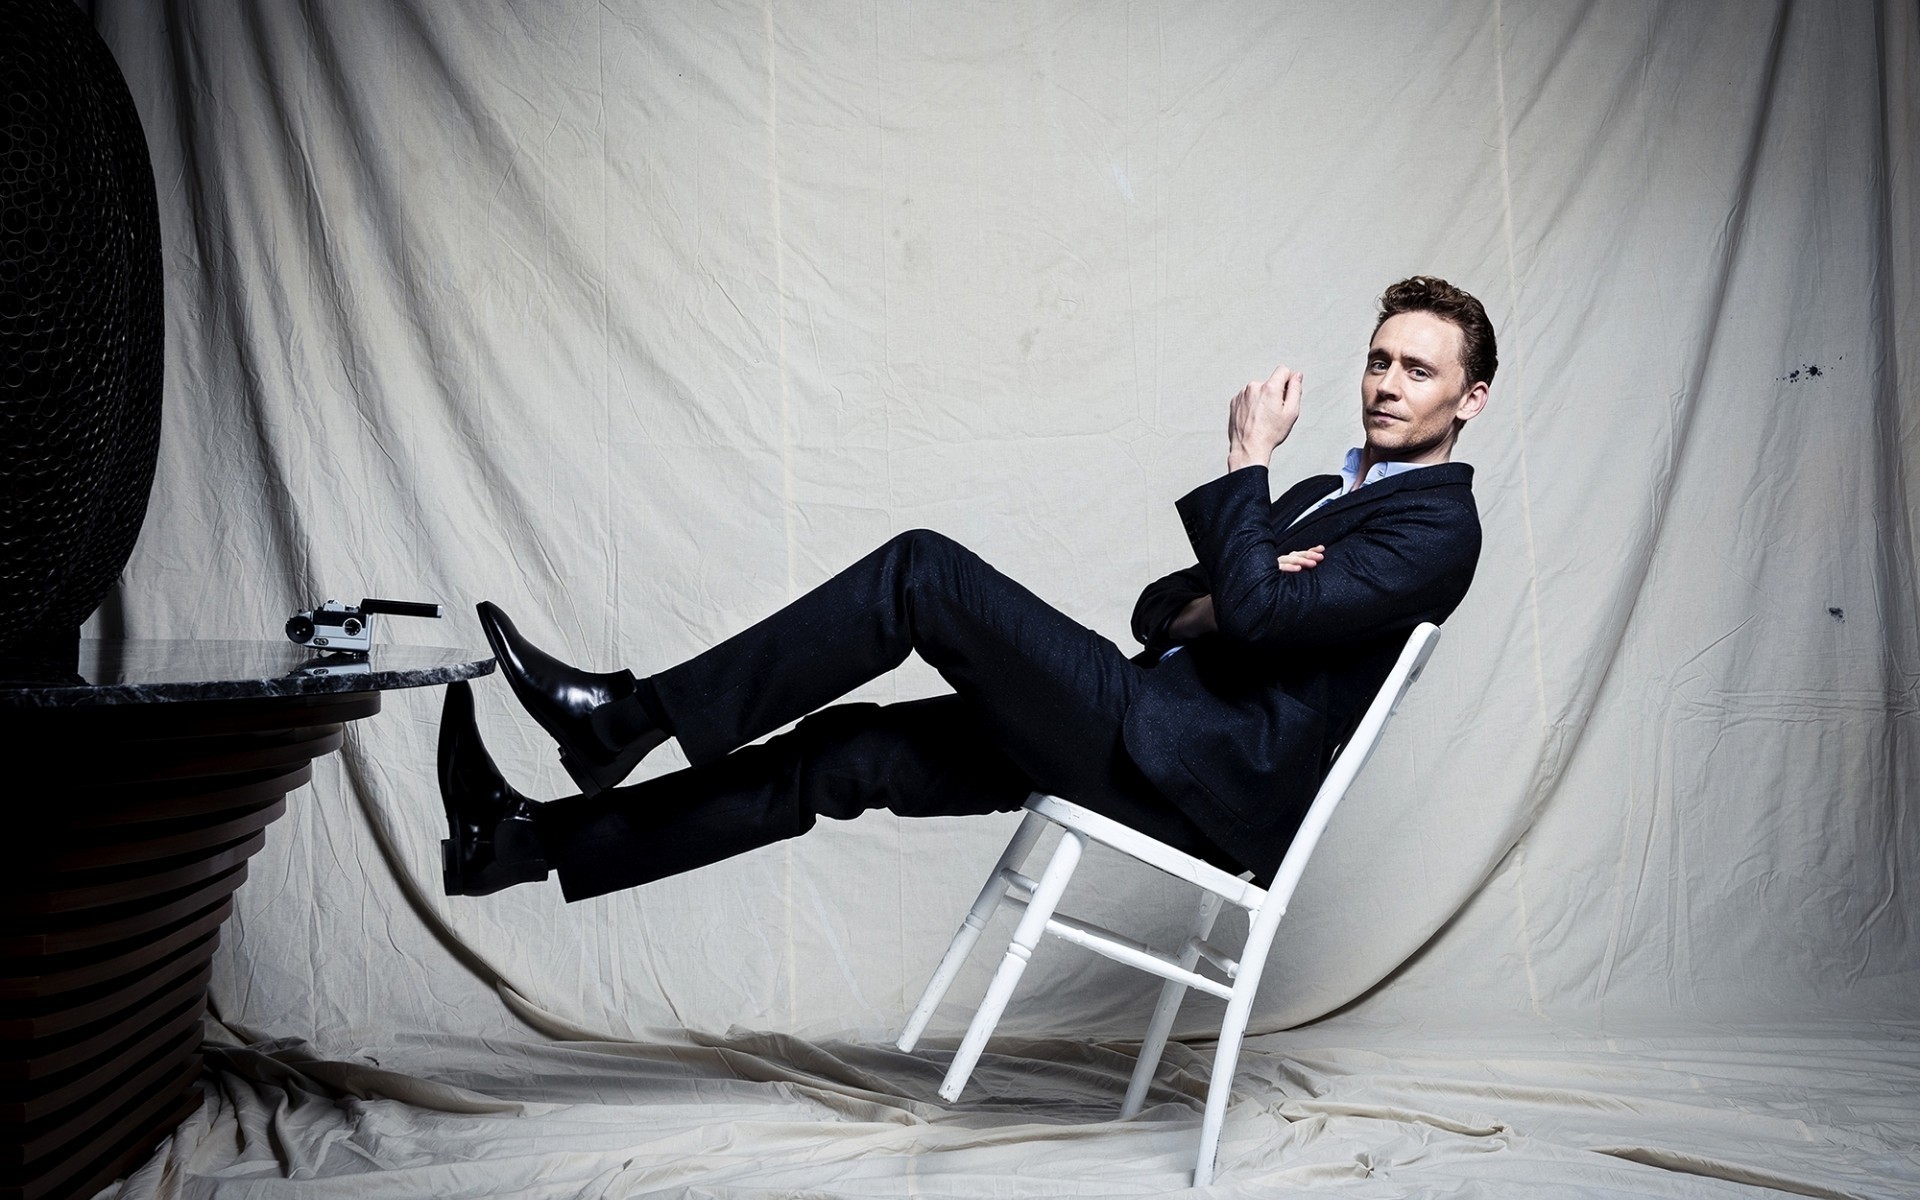 men one adult chair portrait indoors room man seat woman performance tom hiddleston actors celebrity